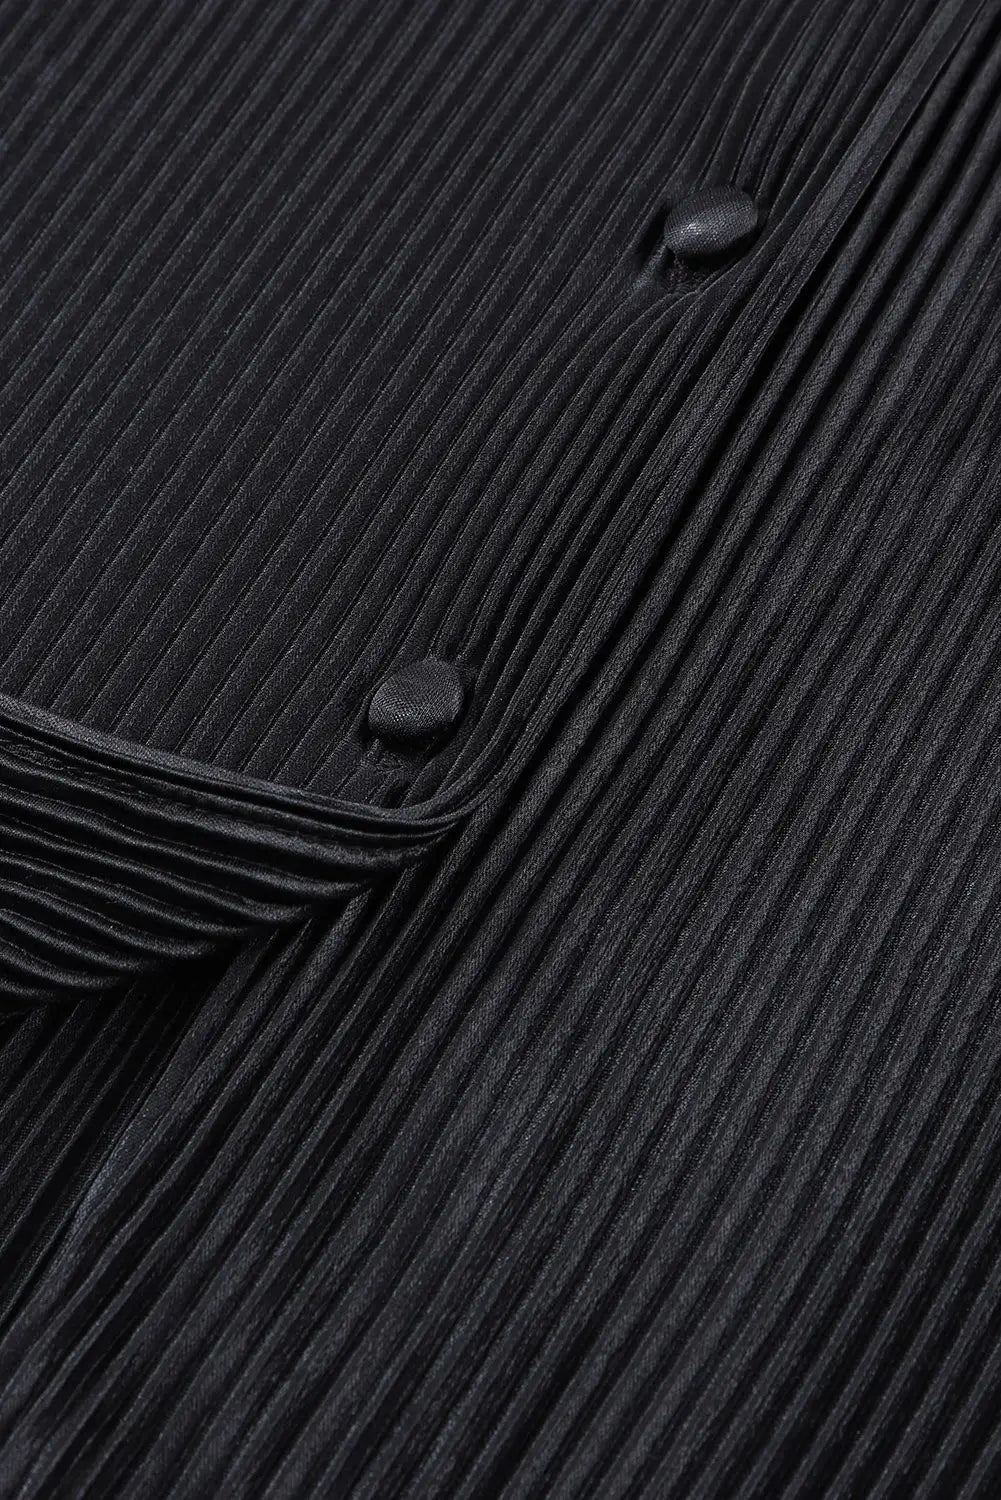 Black 3/4 sleeves pleated shirt and high waist shorts lounge set - loungewear